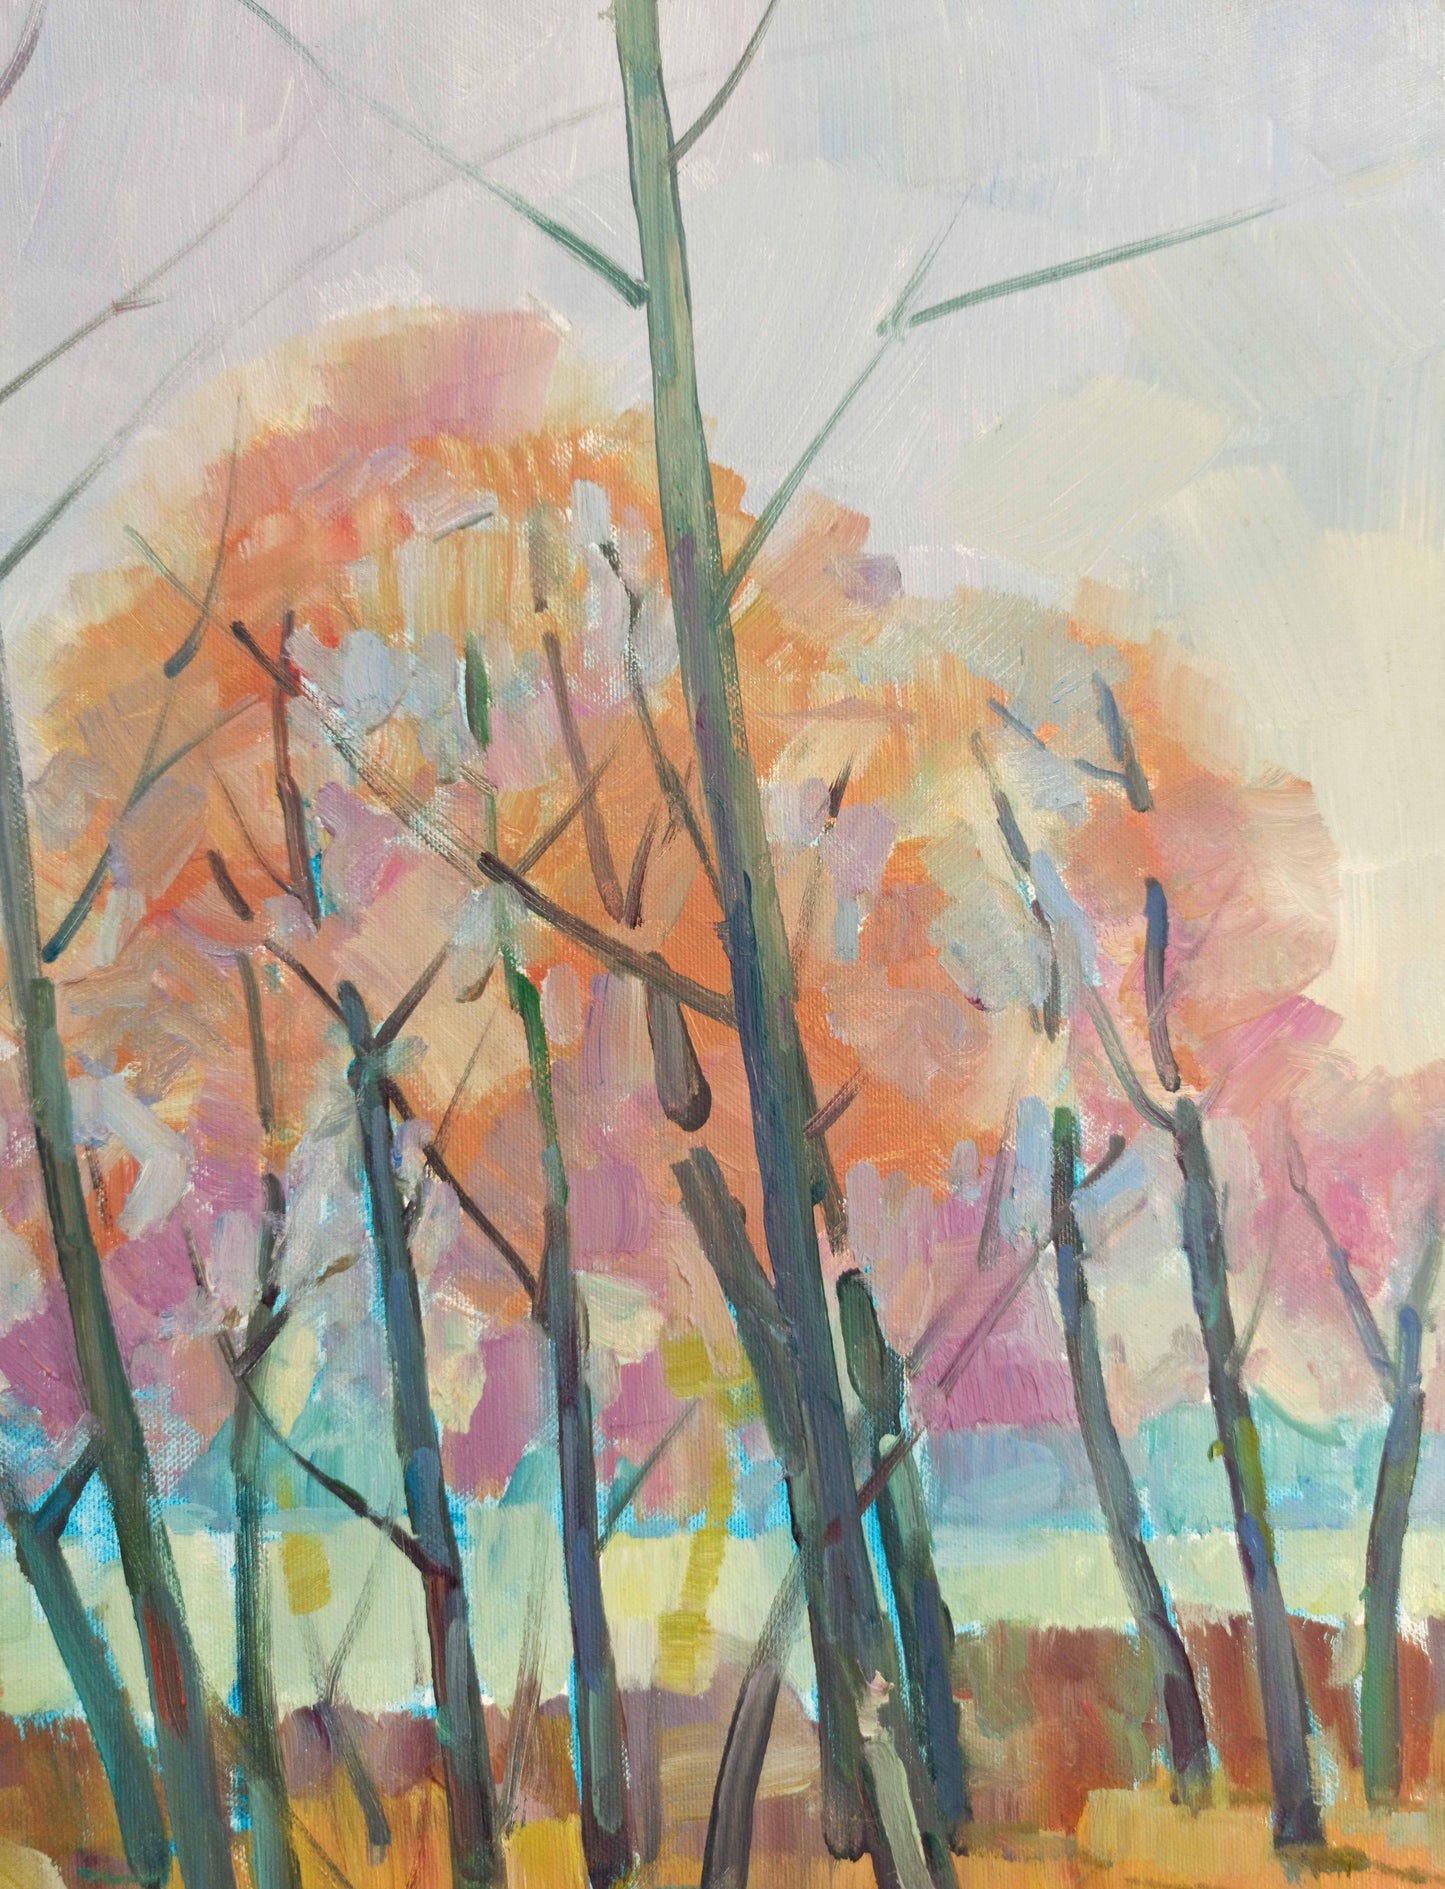 Peter Dobrev's oil artwork portrays a landscape in spring